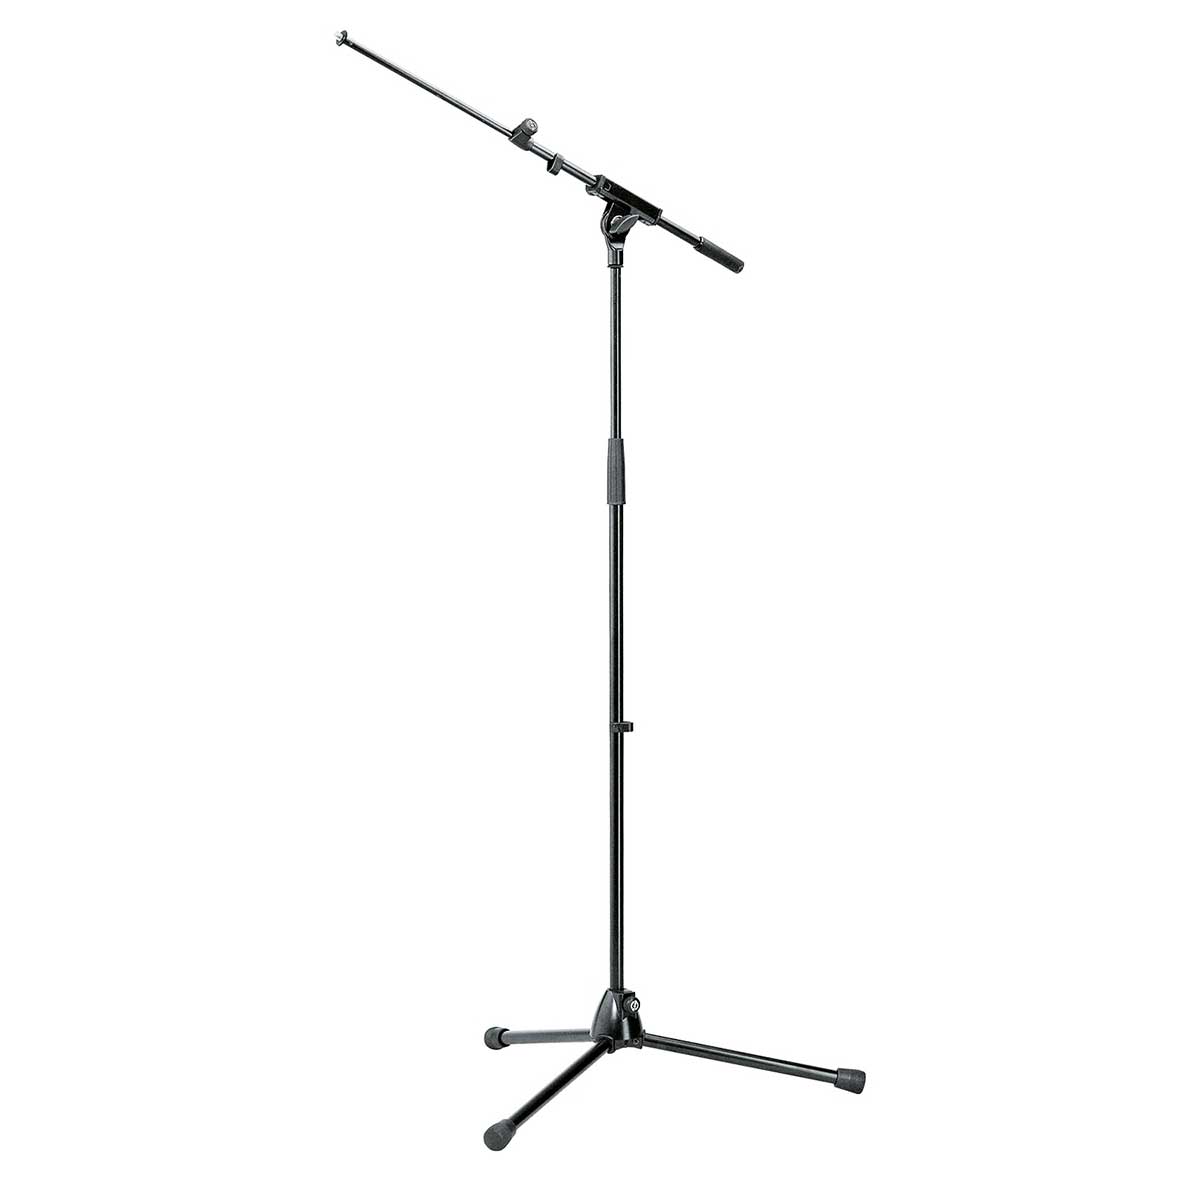 Konig & Meyer 210/8 Microphone stand - Black